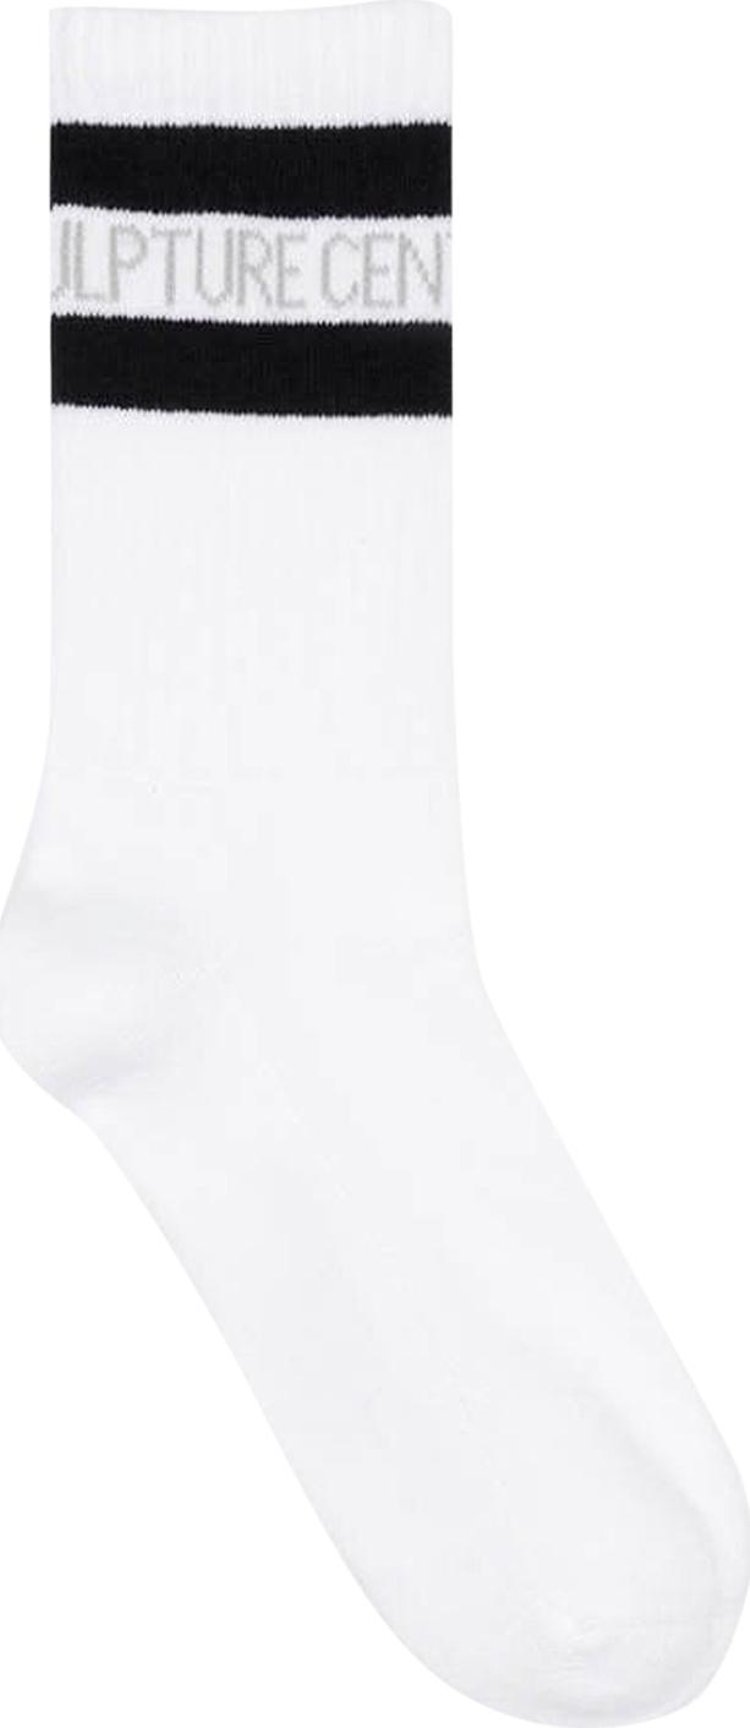 Carhartt WIP x New Balance Socks 'White/Dark Navy'